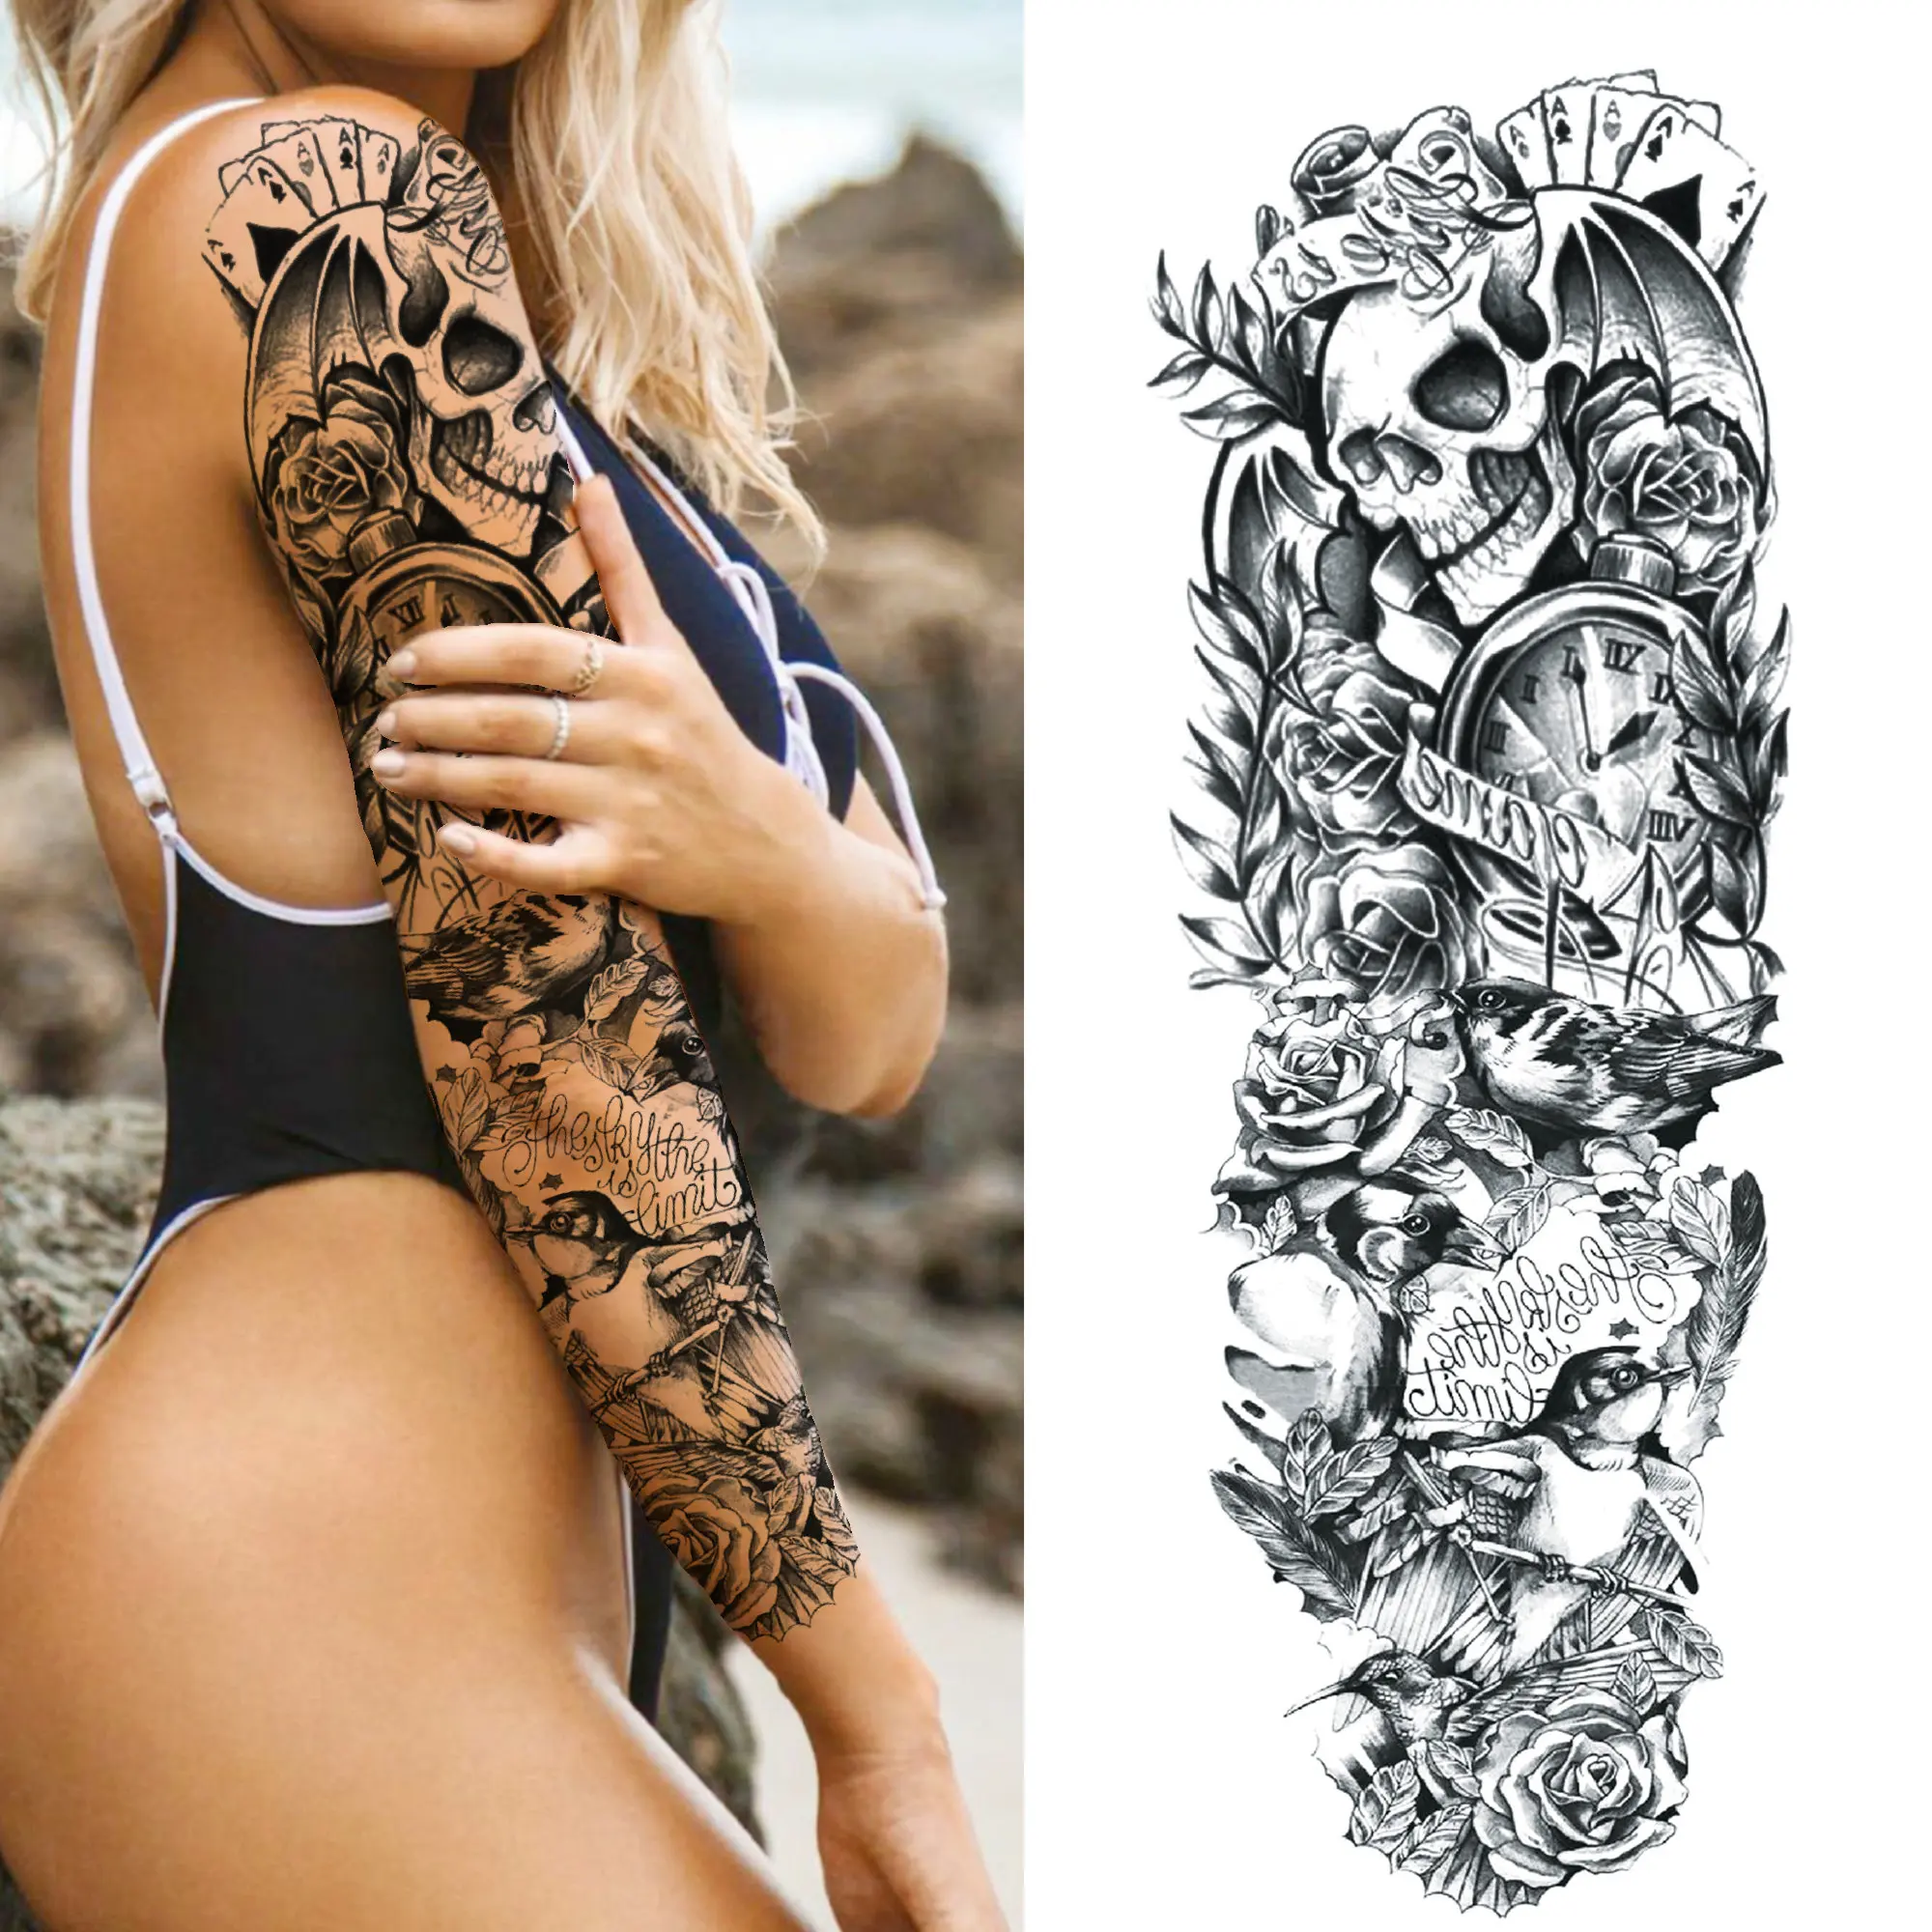 Diesel Women's Sheer Tattoo Graphics Body Suit | eBay